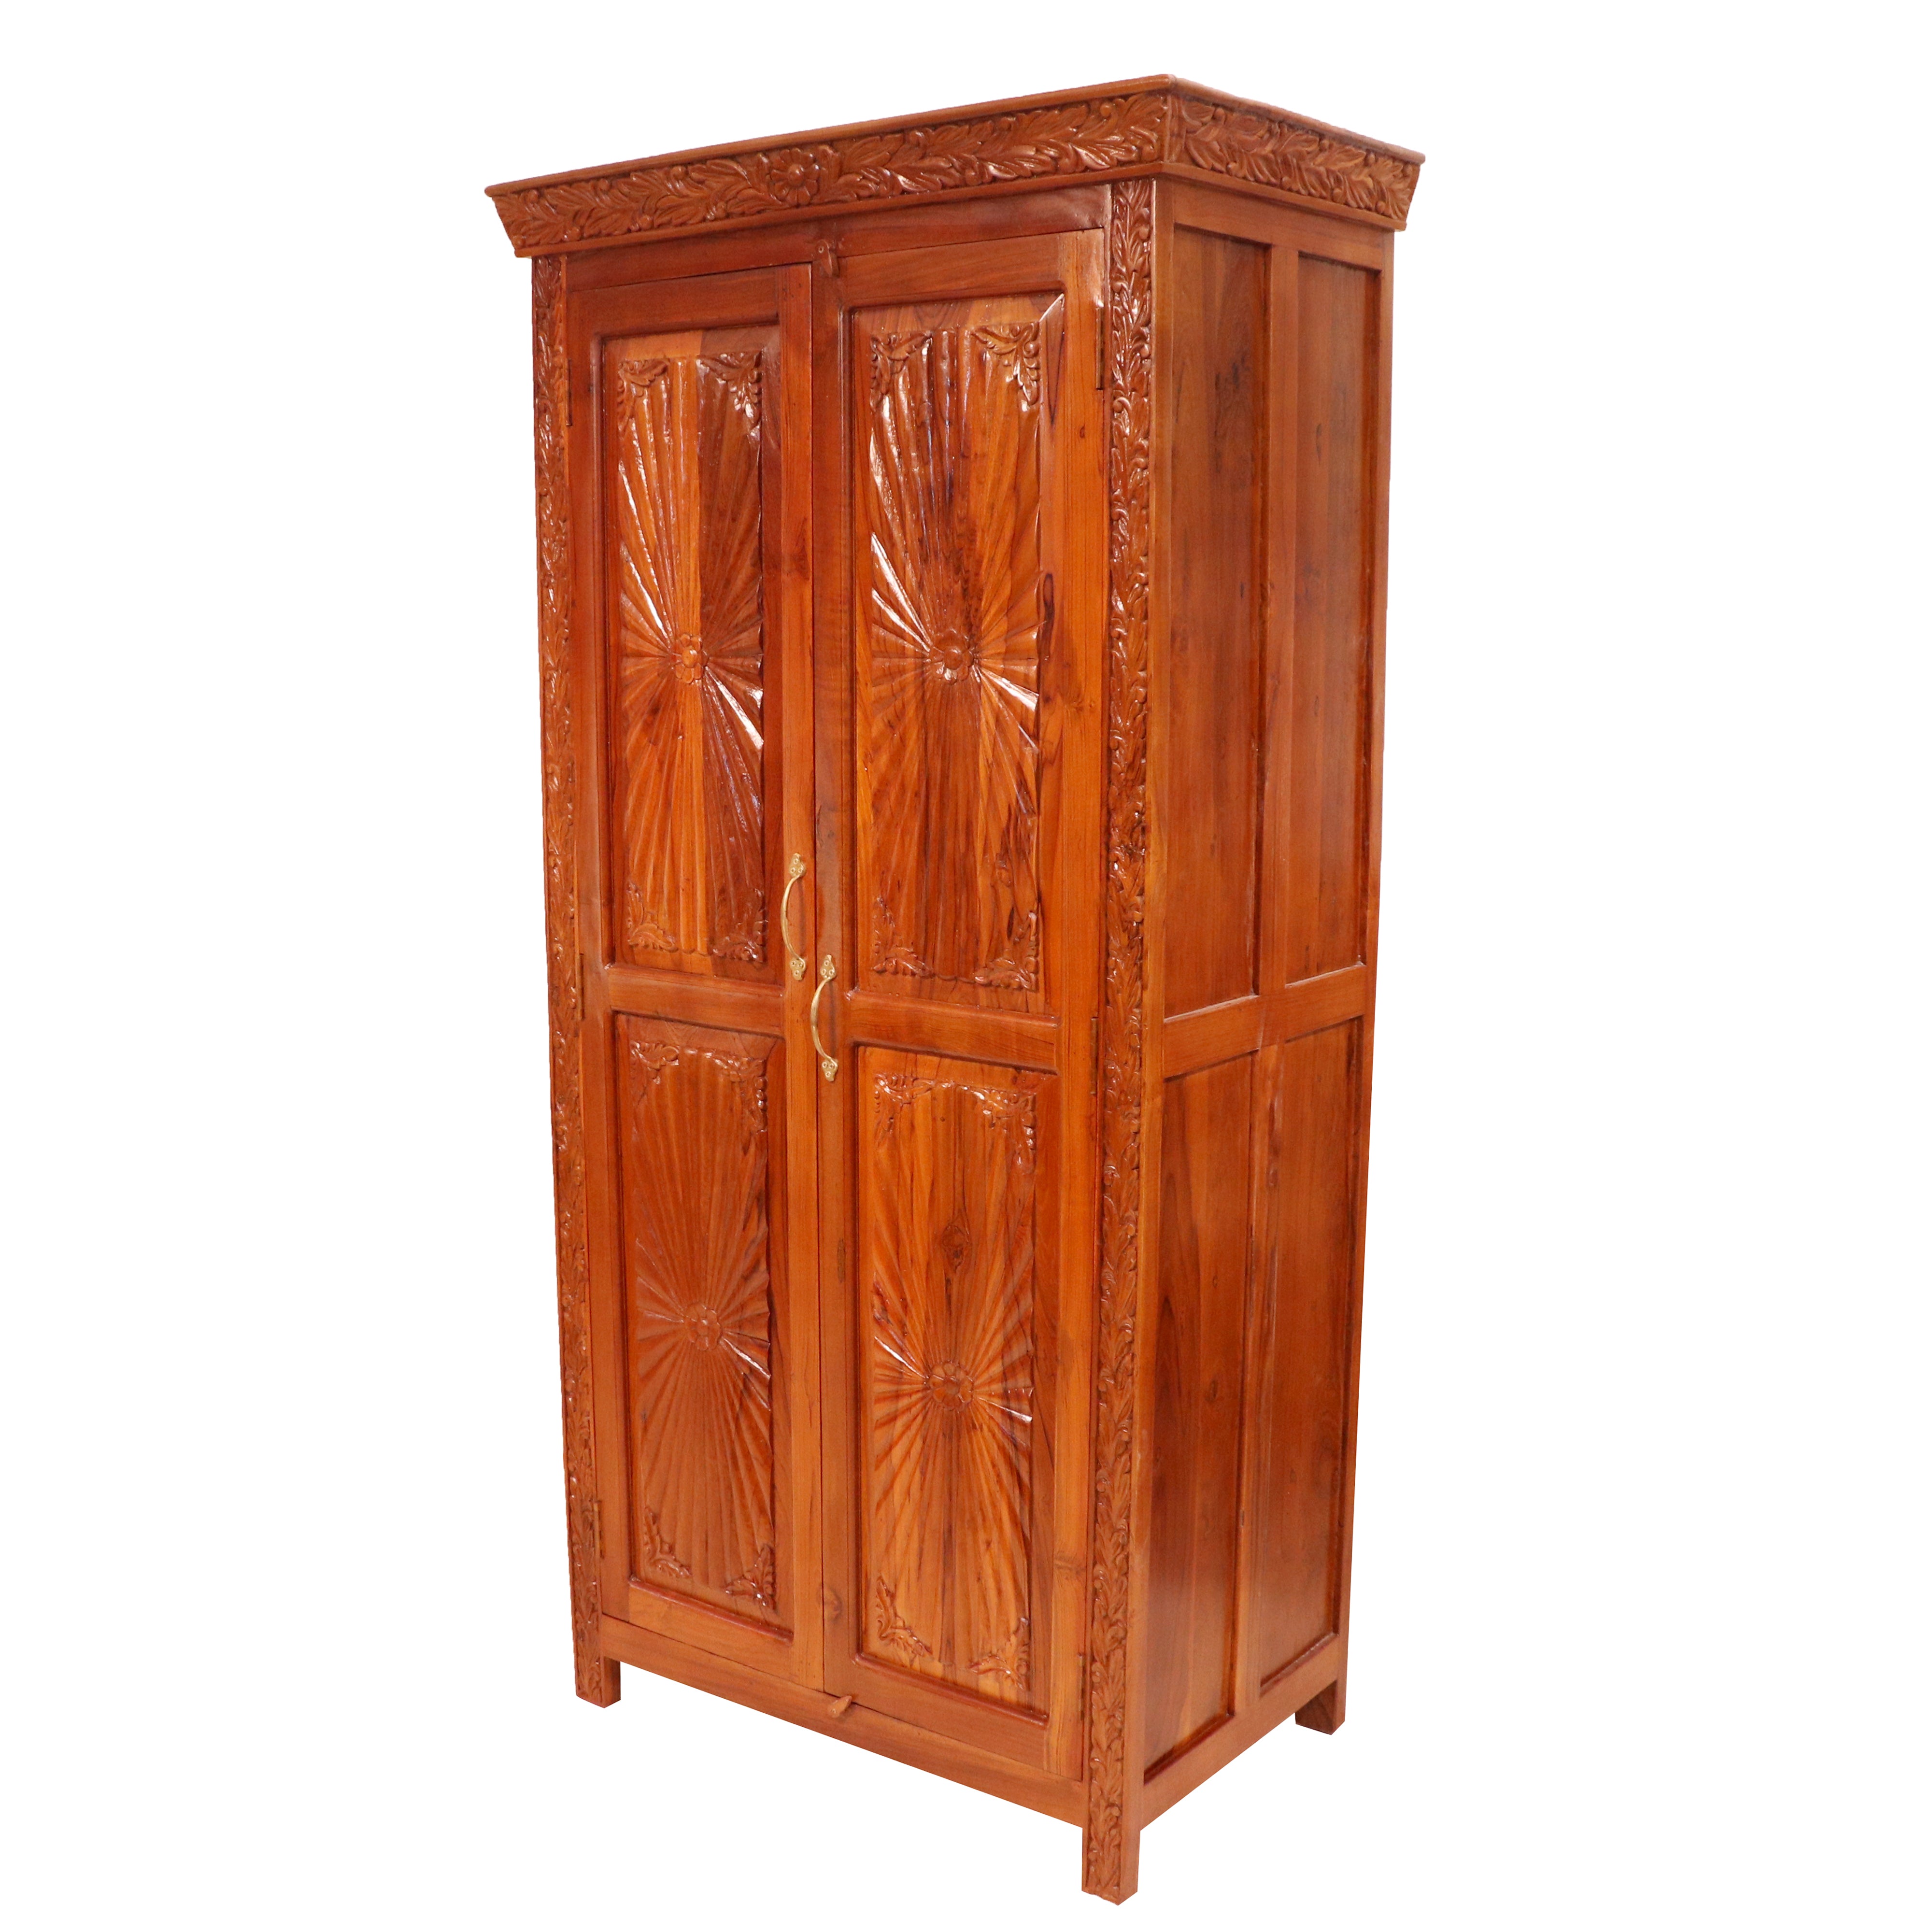 Adorable Decent Storage Vintage Handmade Wooden Large Almirah for Home Wardrobe